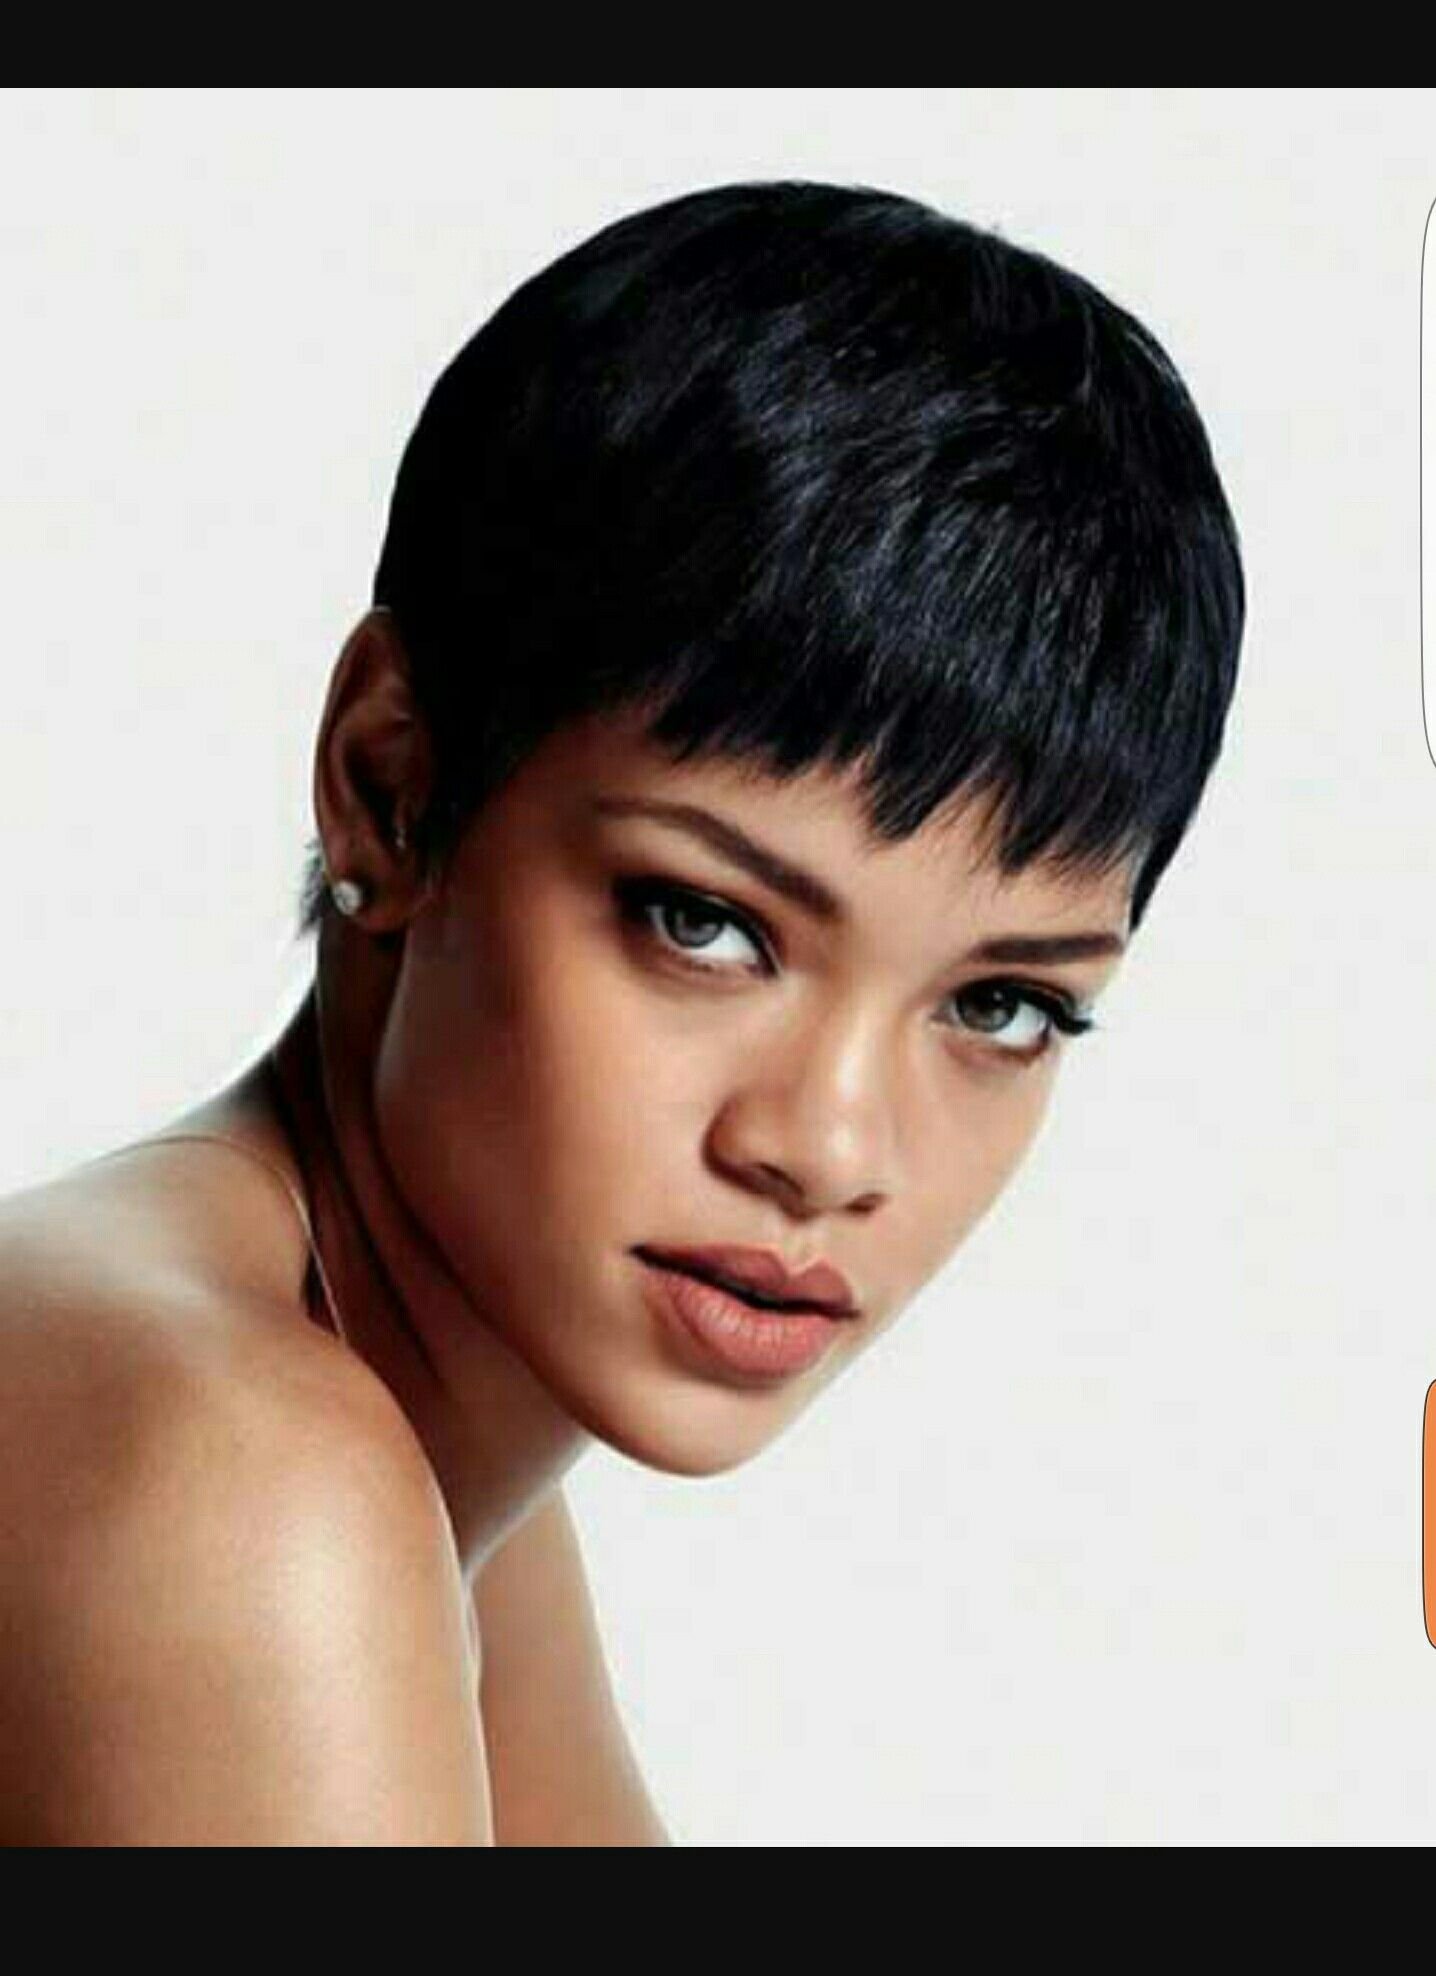 Негритянка короткая стрижка. Рианна стрижка Пикси. Рианна 2006 с короткой стрижкой. Риханна с короткой стрижкой. Rihanna с короткой стрижкой.